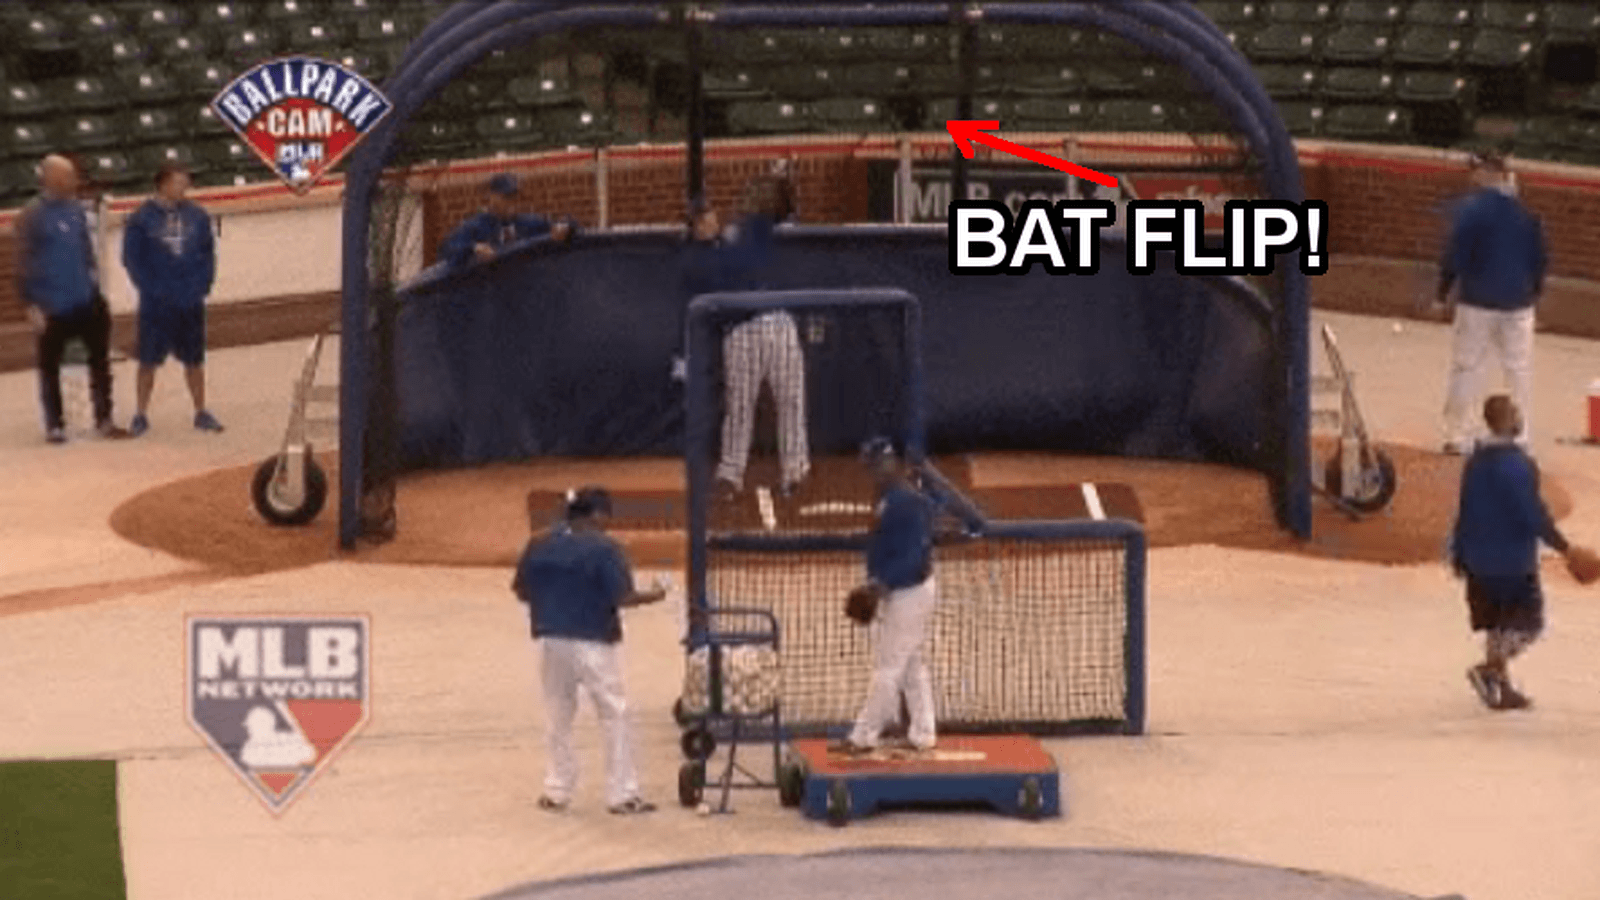 Jose Bautista inspired the Cubs to practice bat flips